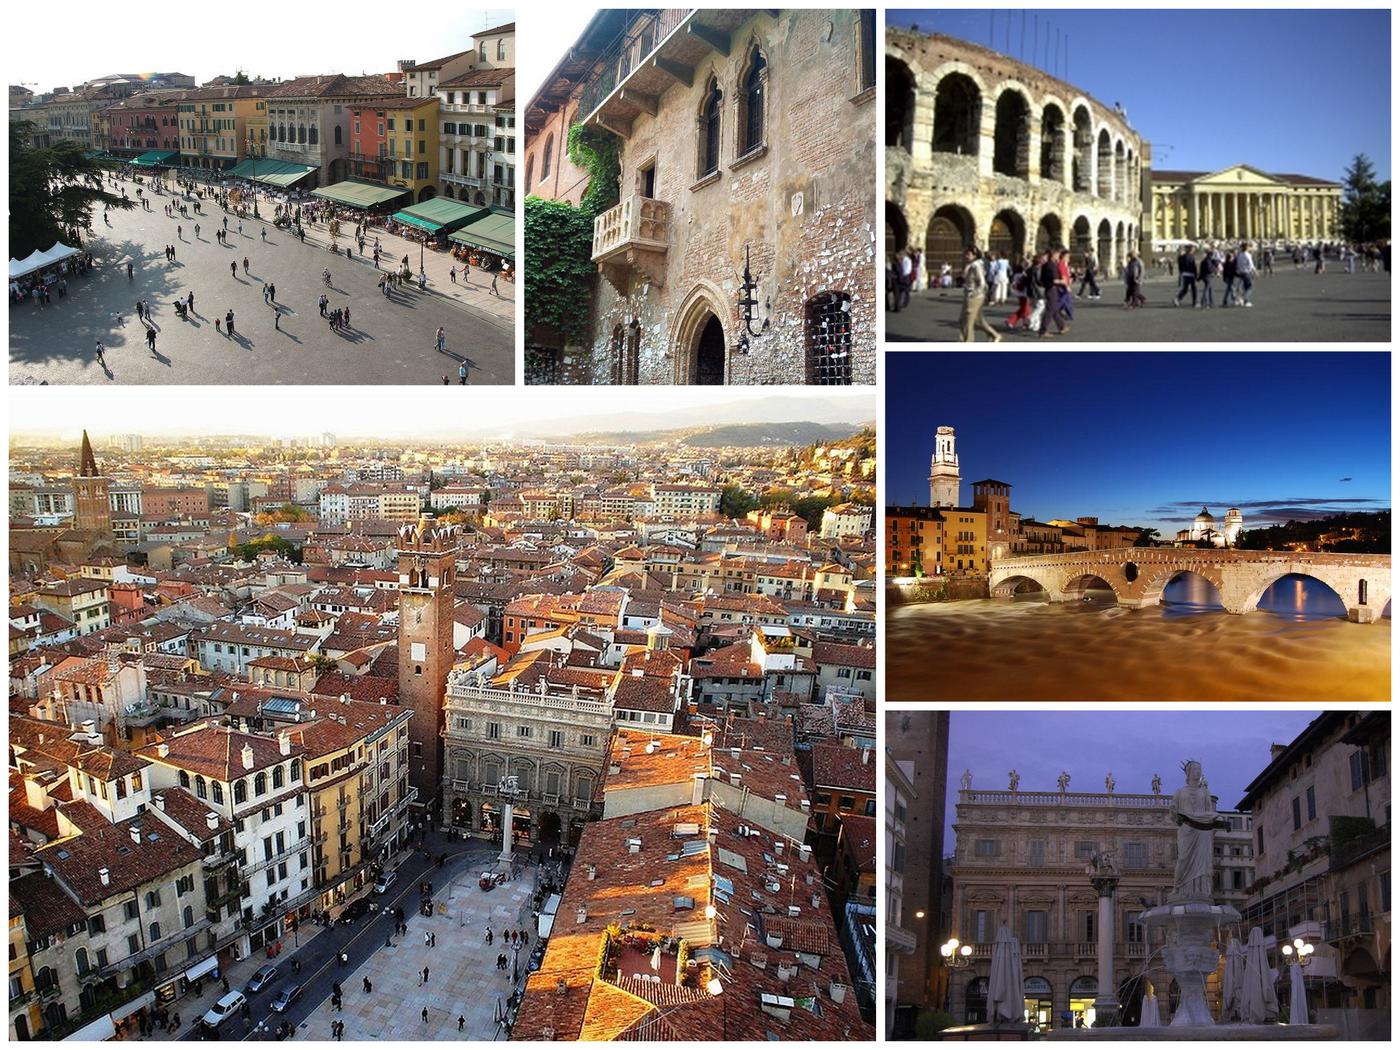 Verona: Where History Meets Romance